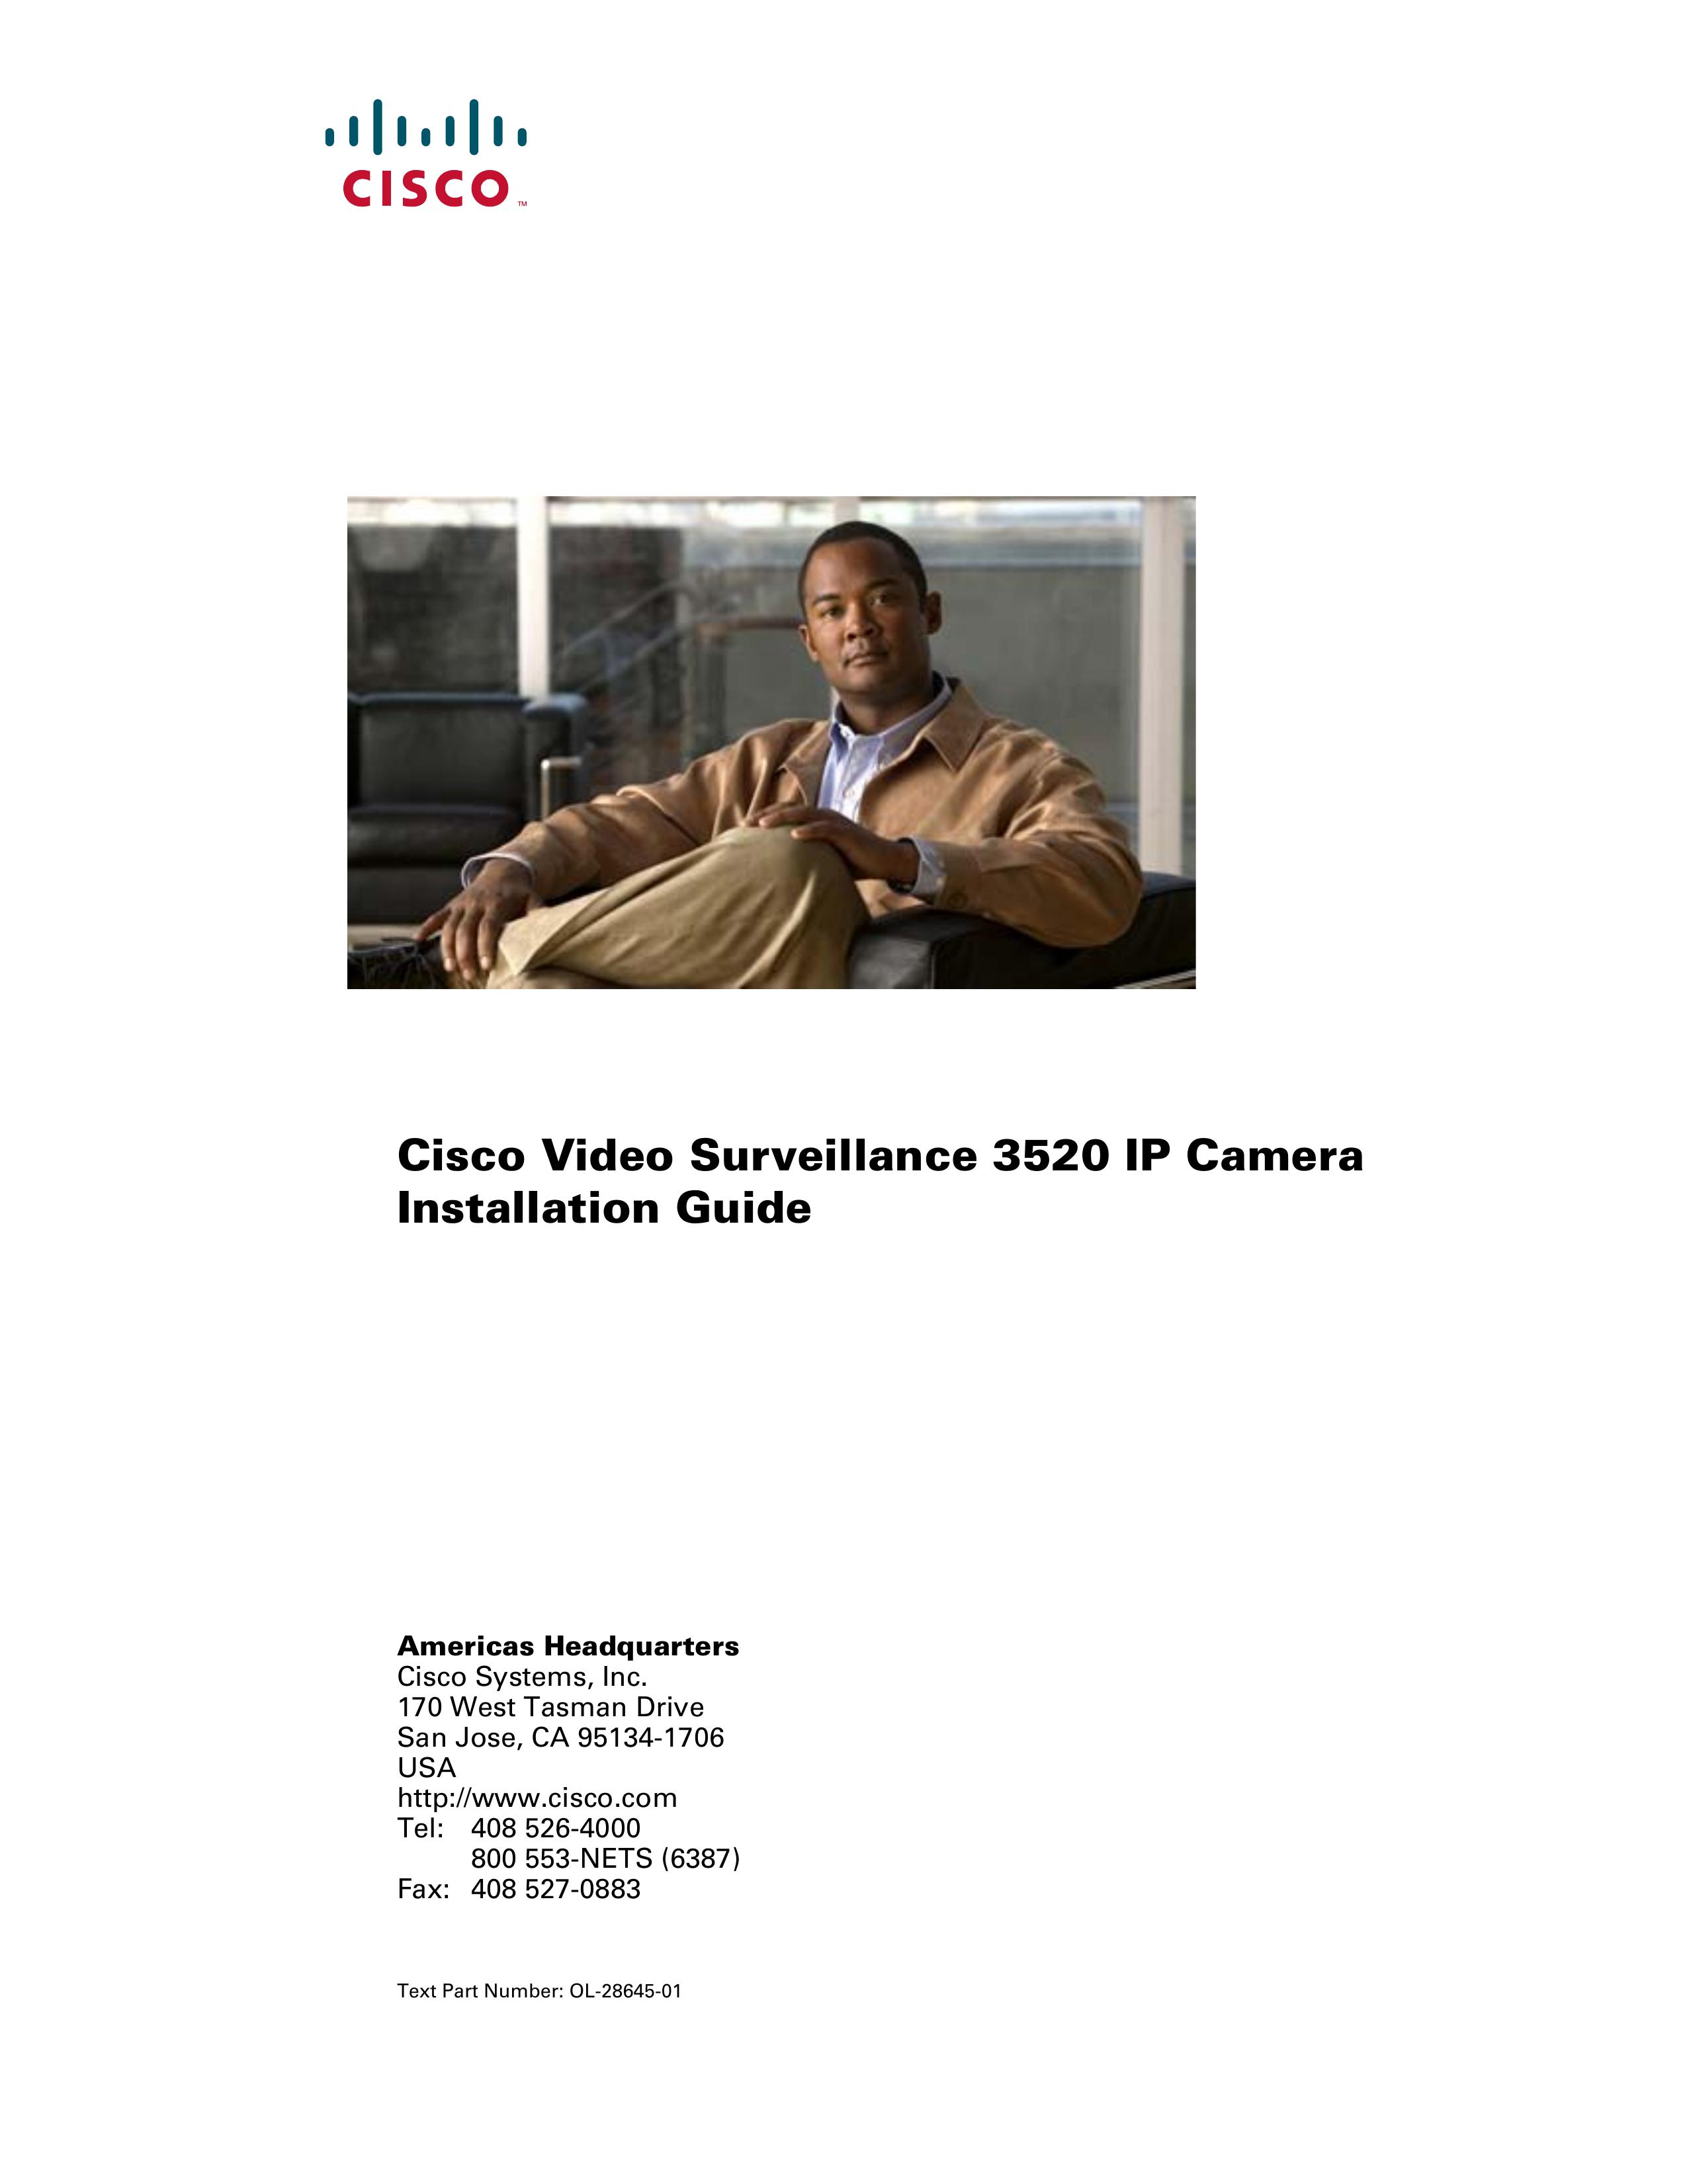 Cisco Systems OL-28645-01 Security Camera User Manual